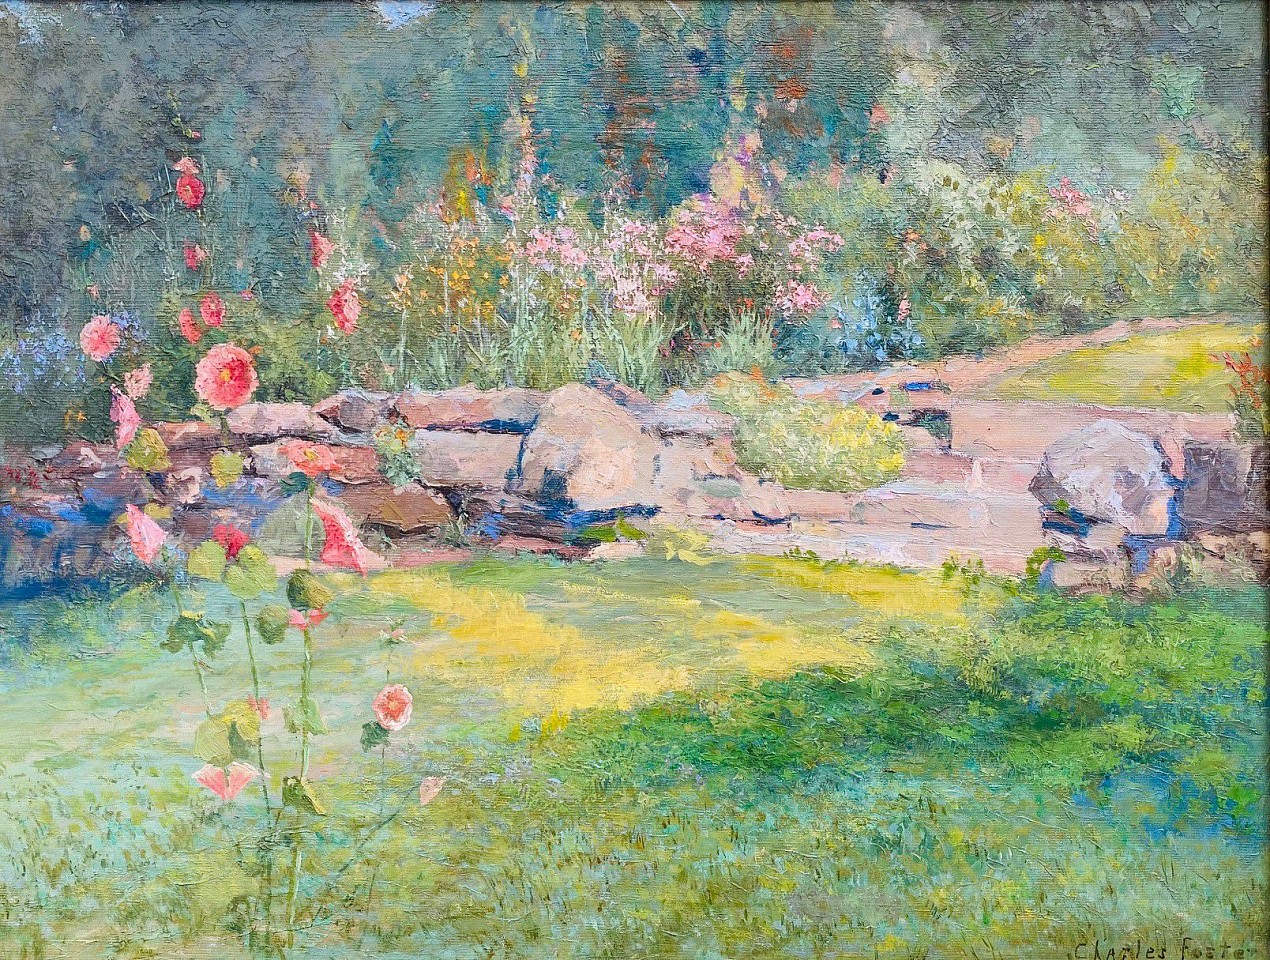 Charles B. Foster, My Garden
oil on canvas, 22 1/4"" x 29""
JCA 6613
$8,500